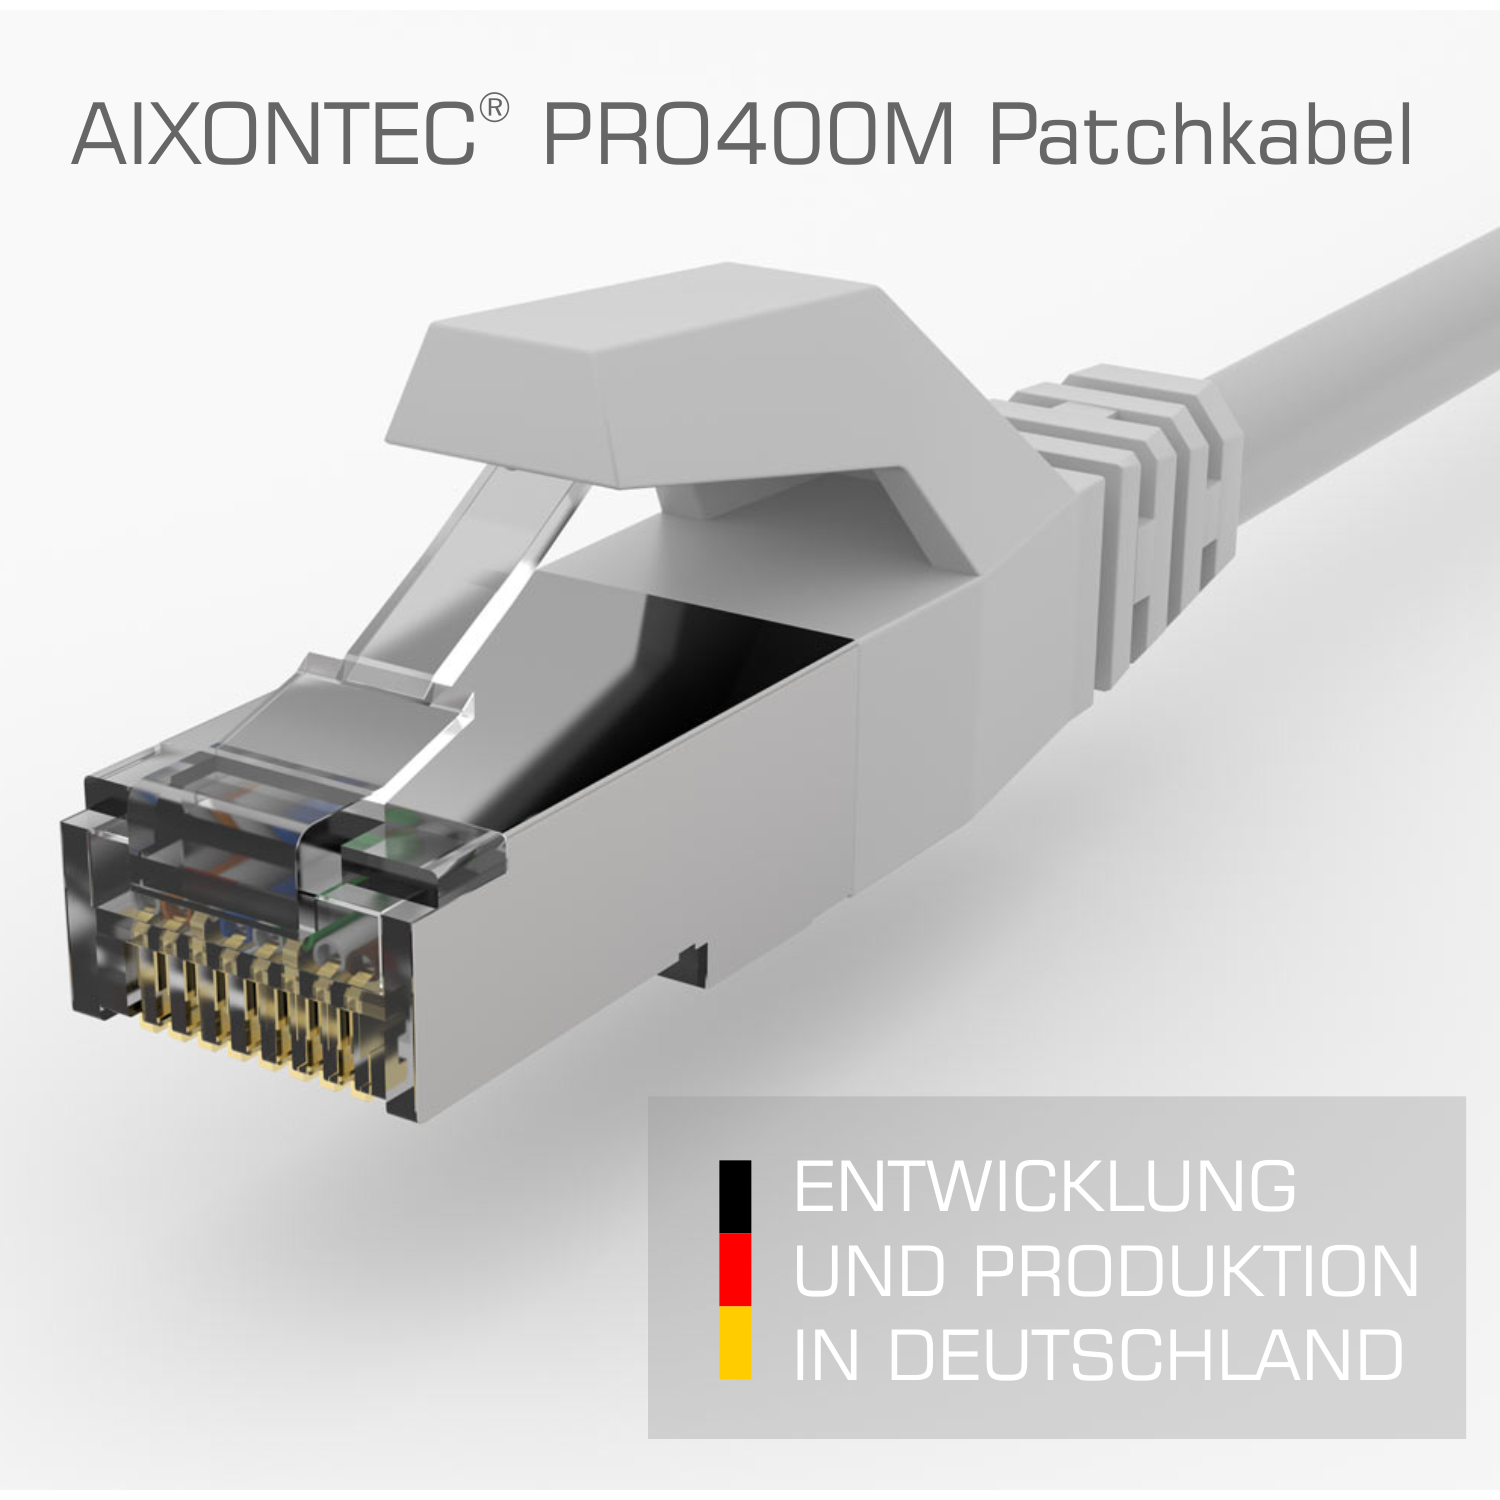 Gigabit, 10 m Lankabel Ethernetkabel Patchkabel 2x Netzwerkkabel, Cat.6 RJ45 AIXONTEC 2,5 2,5m